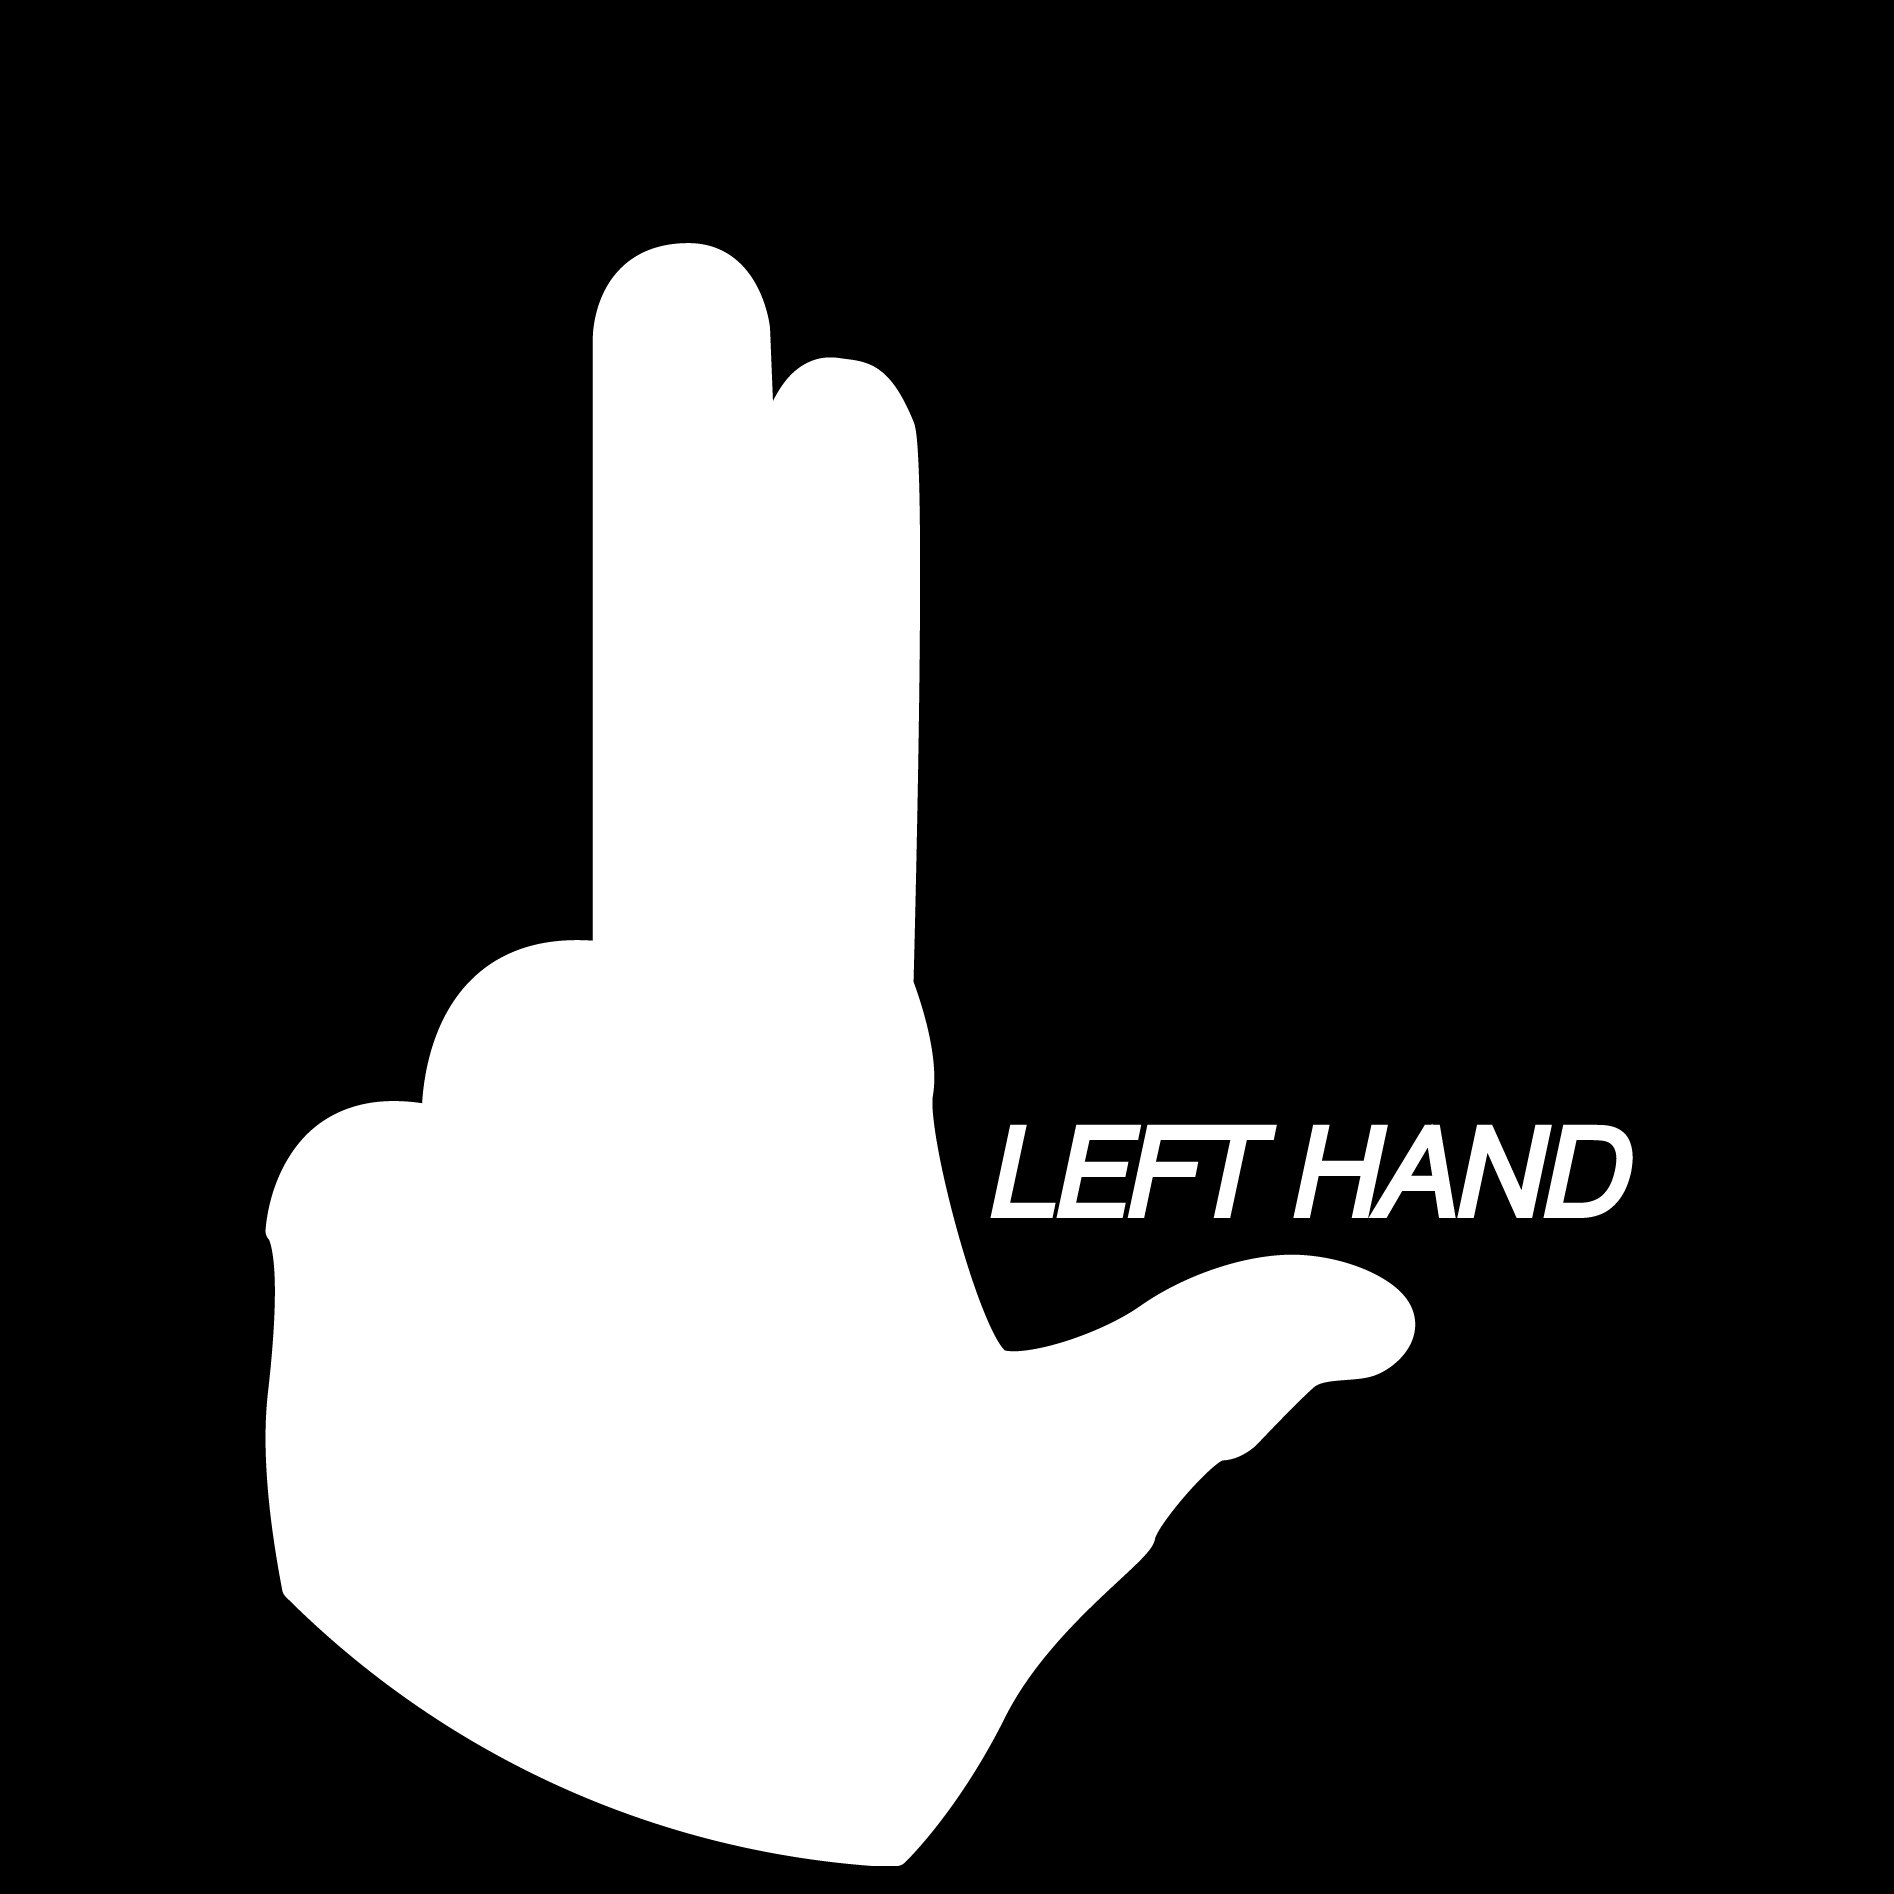 Renat’s Left Hand and Renat’s Right Hand